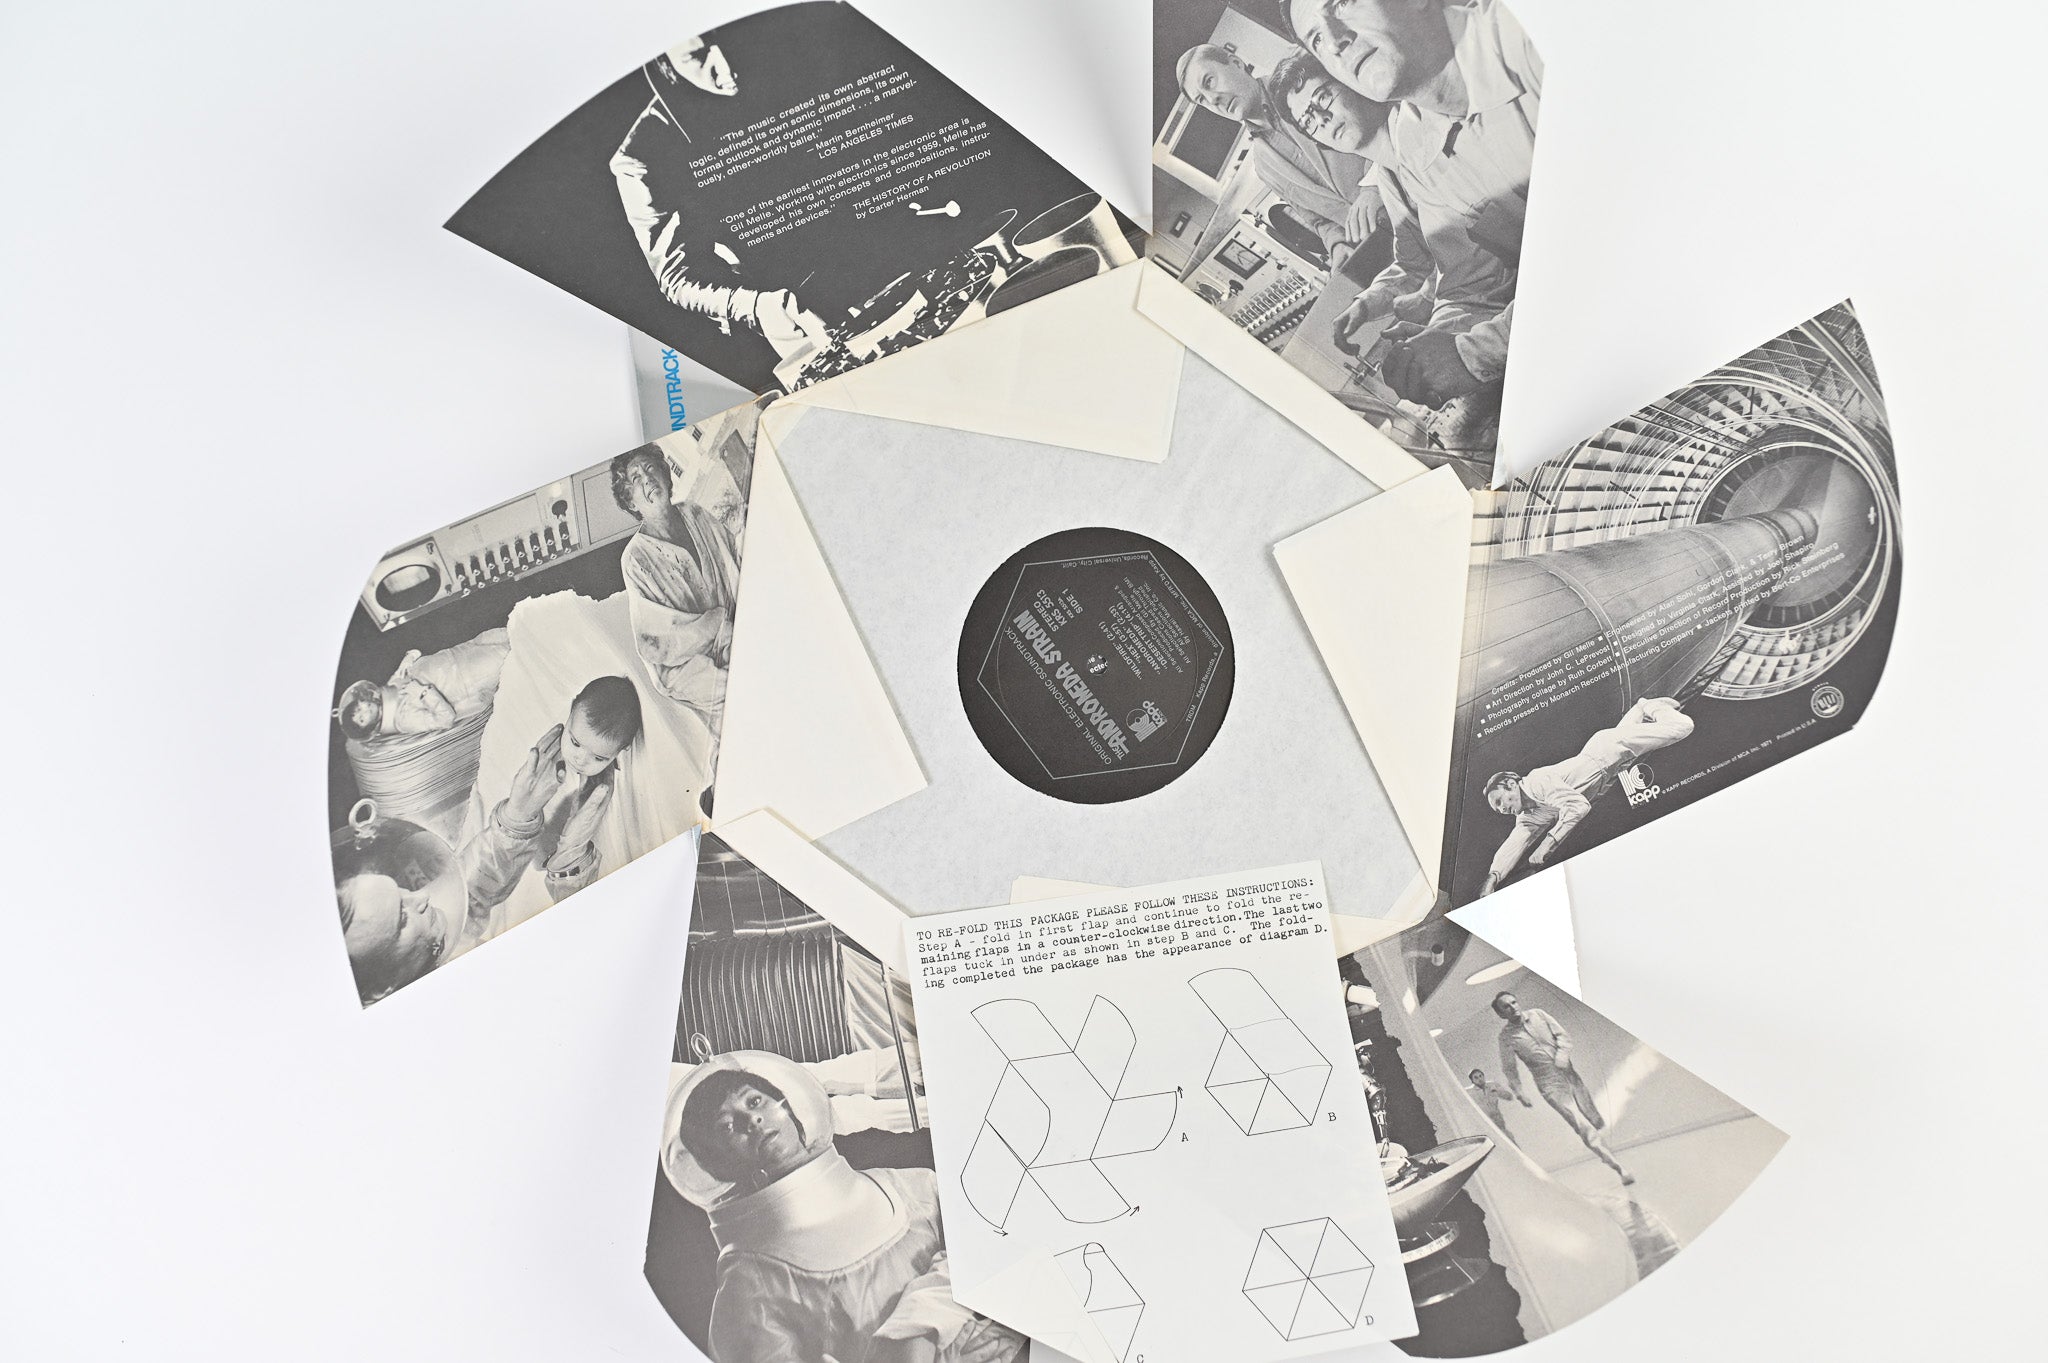 Gil Mellé - The Andromeda Strain Original Electronic Soundtrack on Kapp Hexagonal Gimmick Cover